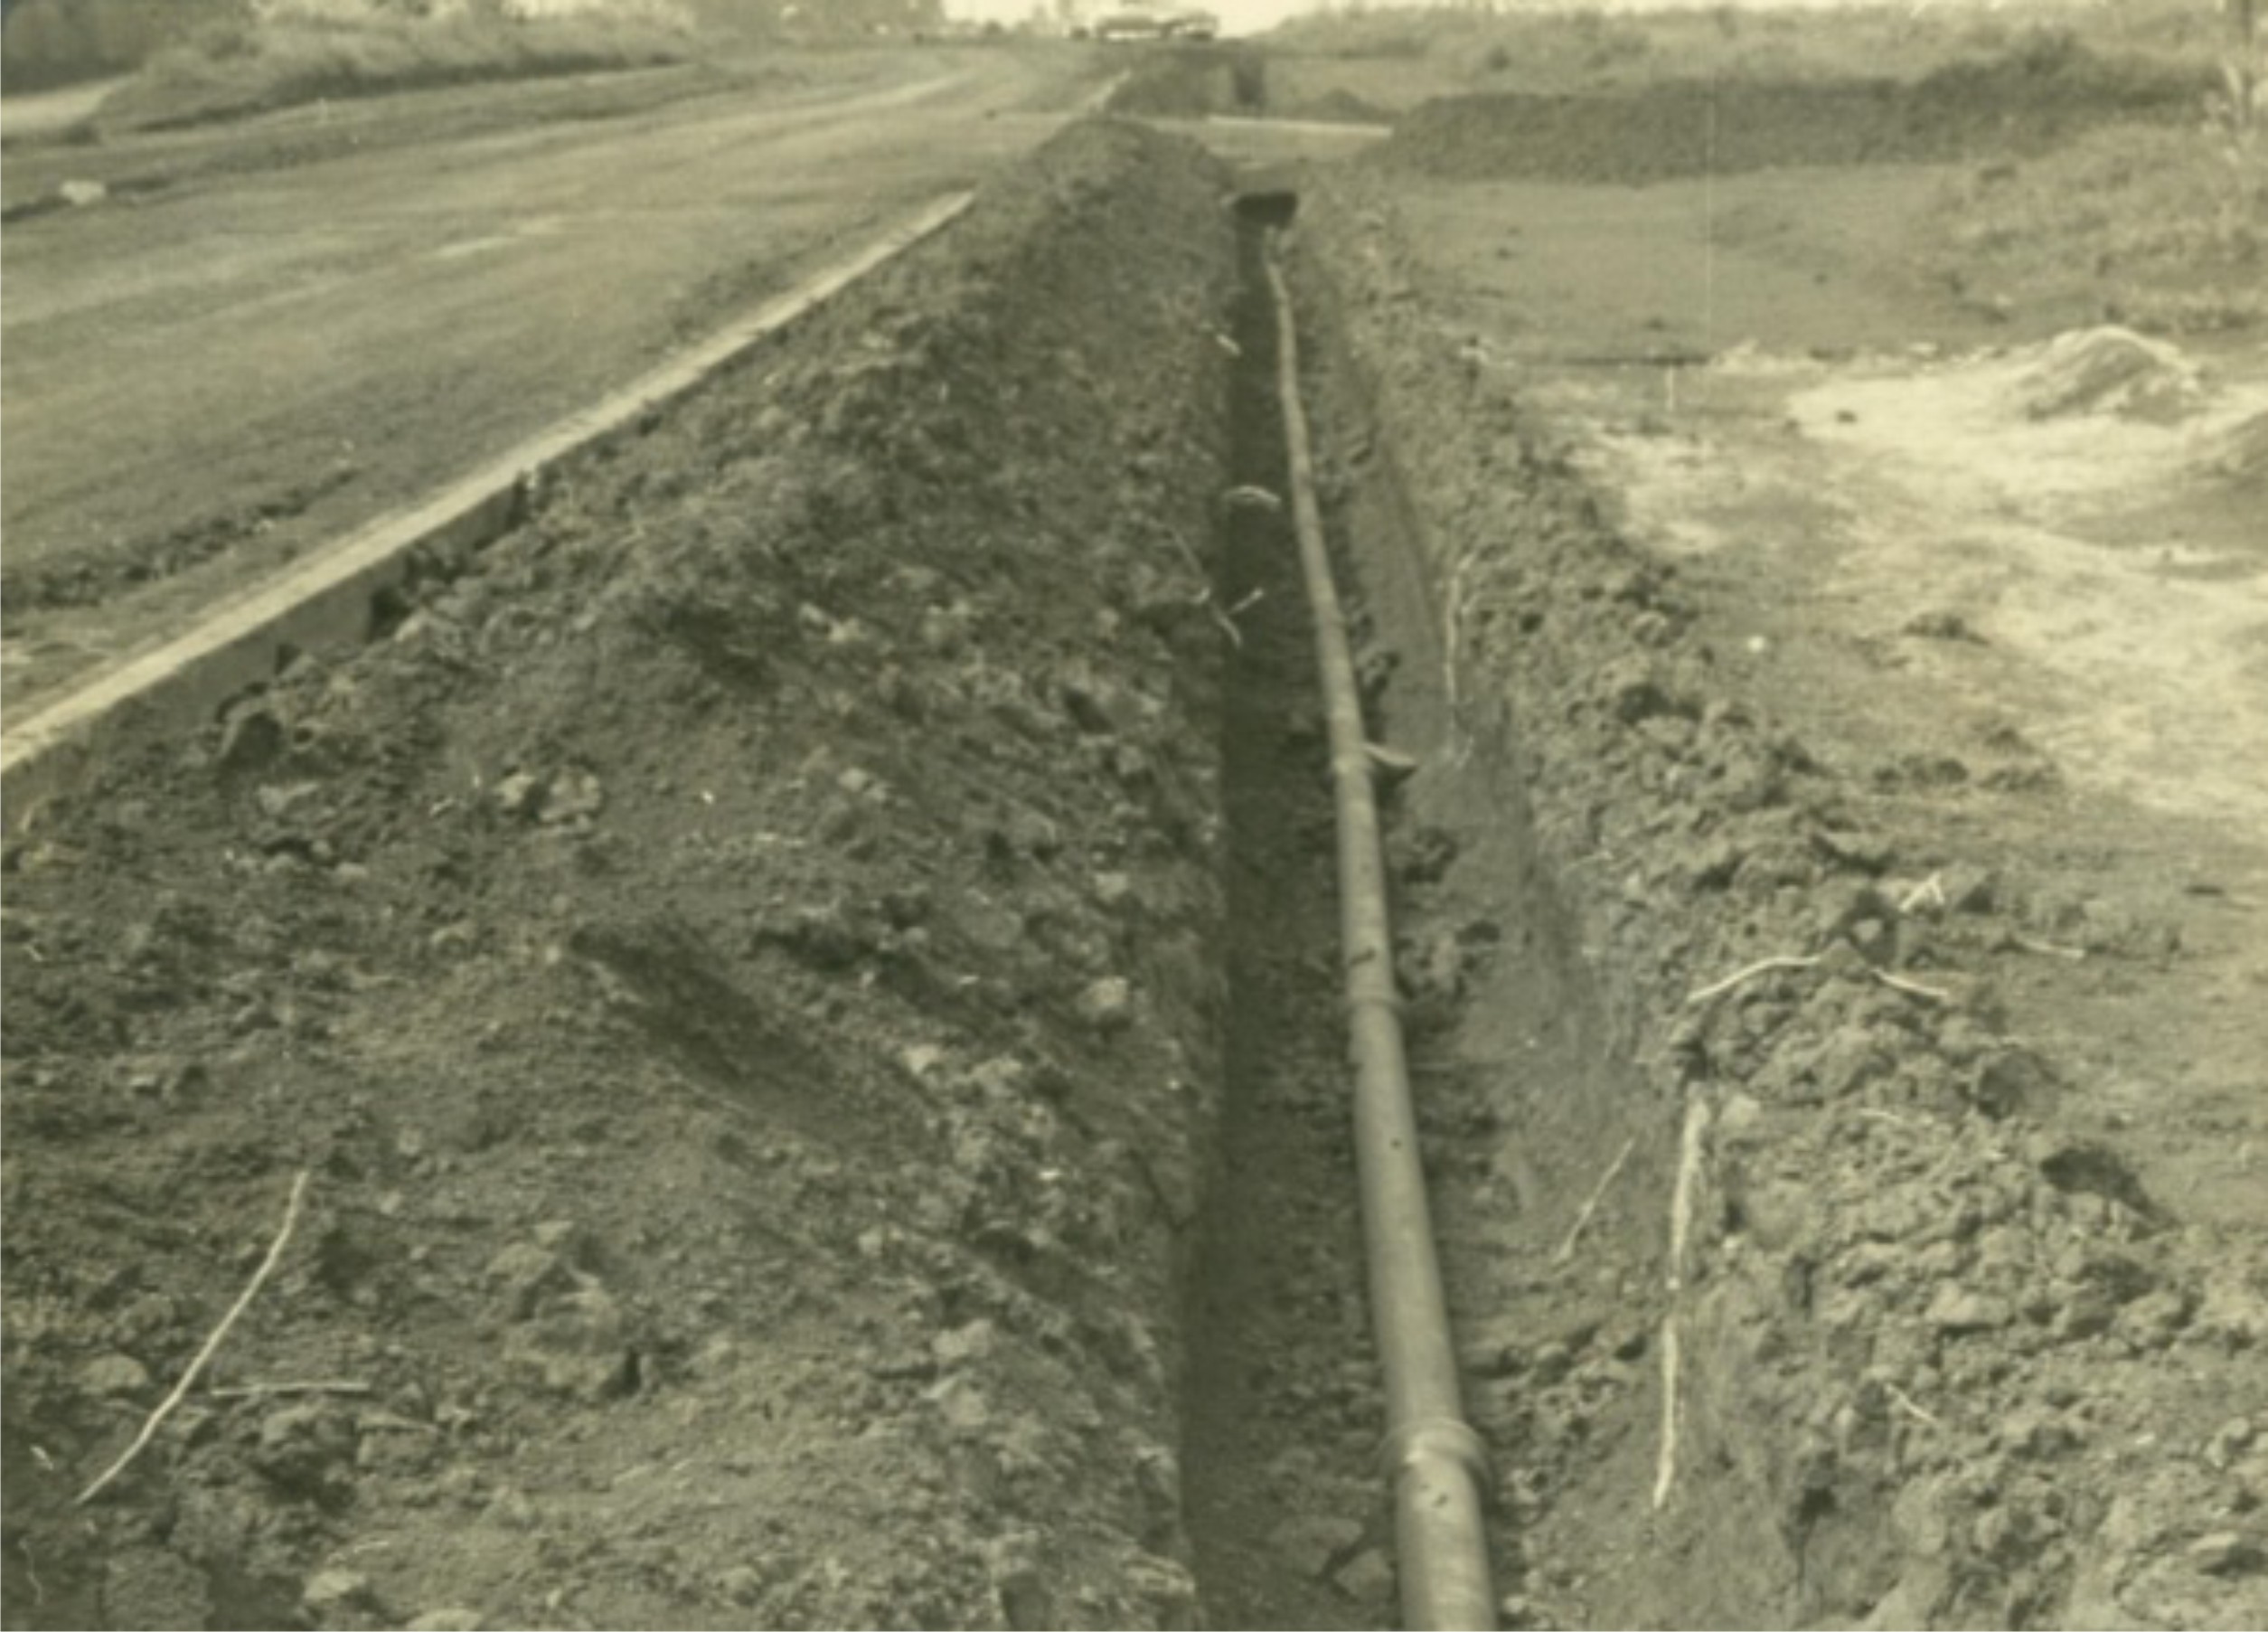 Saneamento básico pela Avenida Pedro Taques - Década de 1960